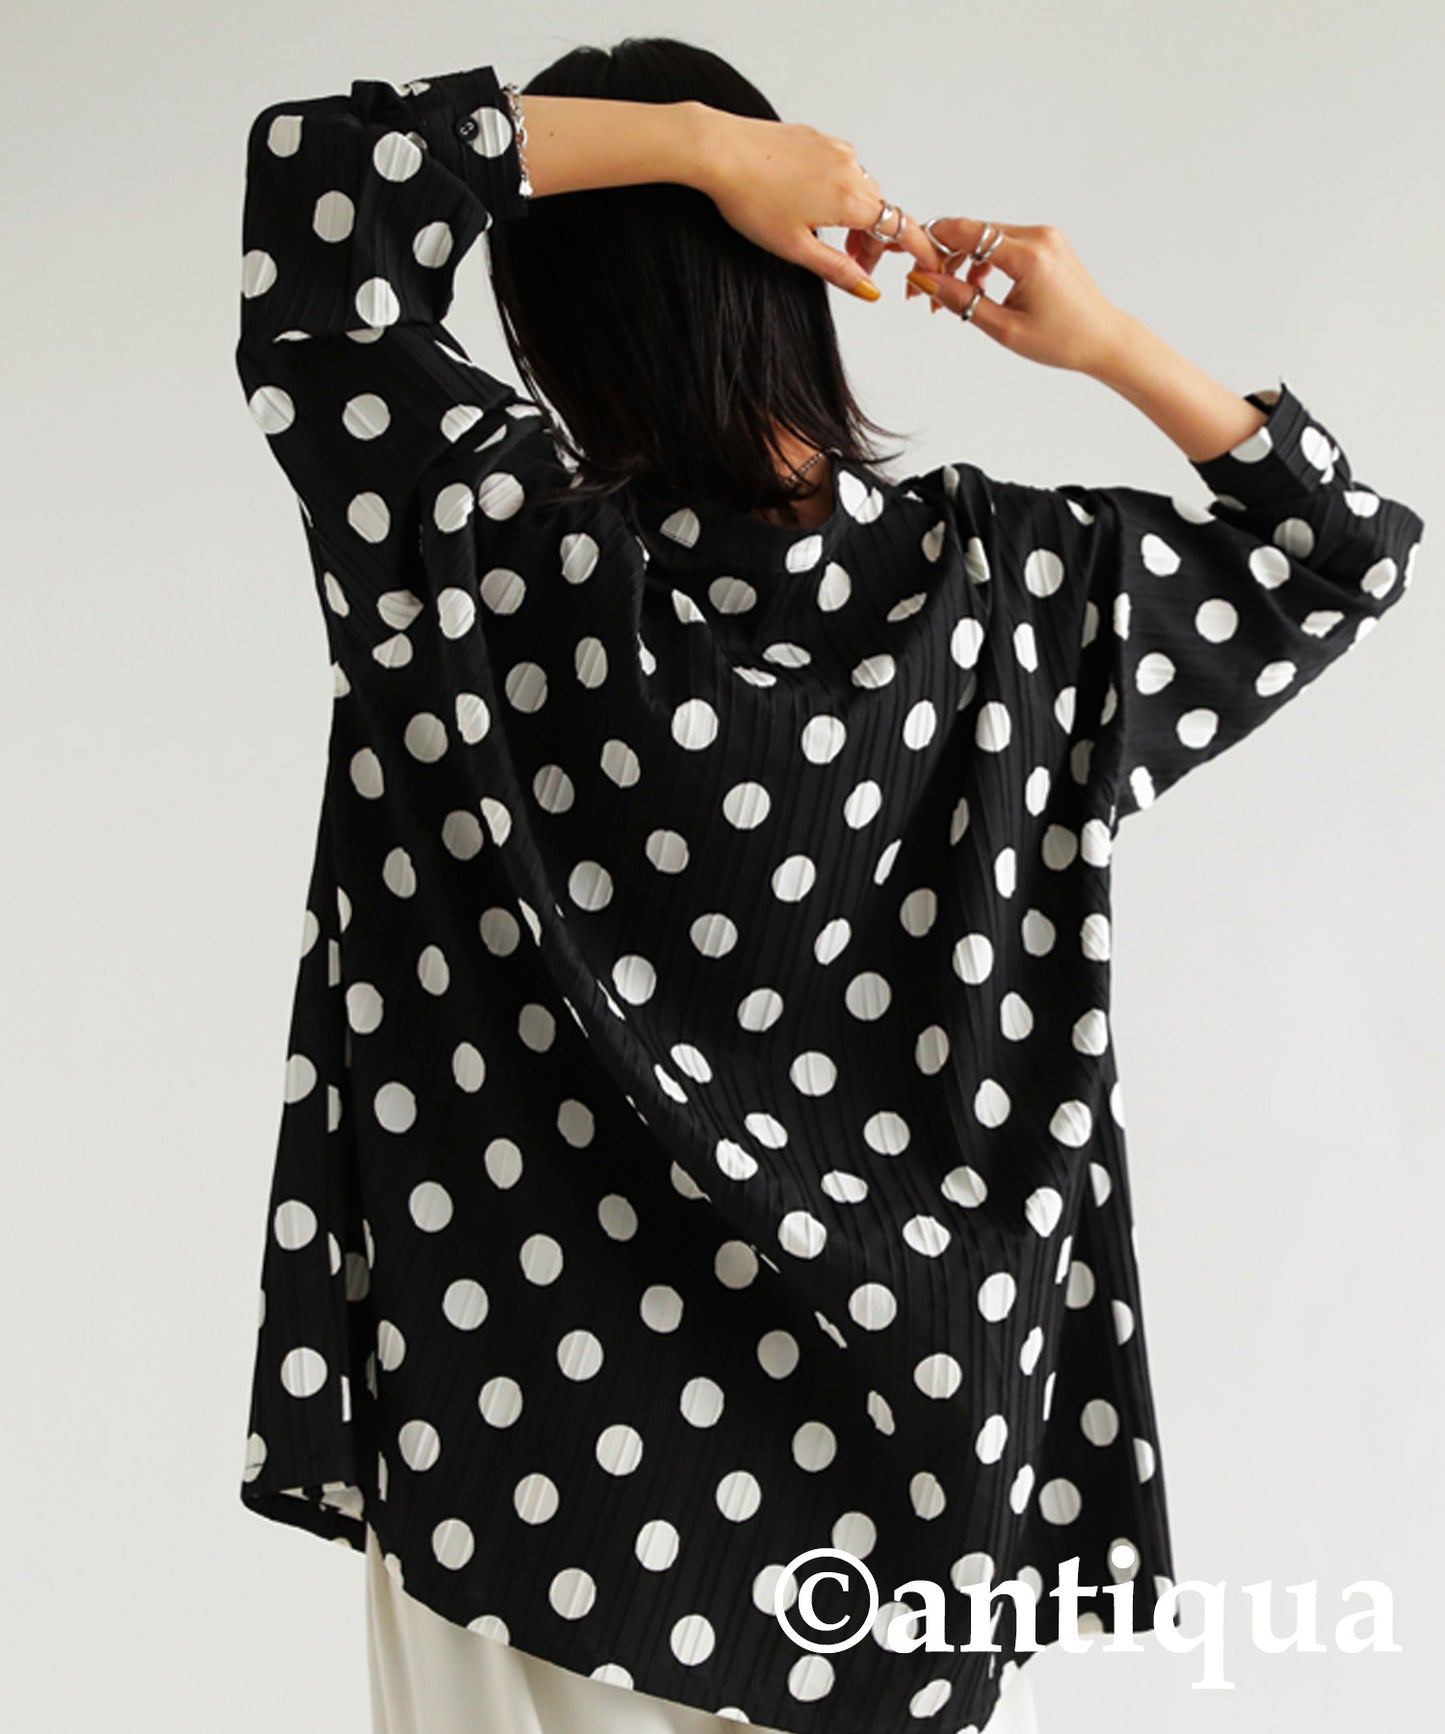 Dot pattern Ladies Shirt Ladies Tops Long-Sleeve